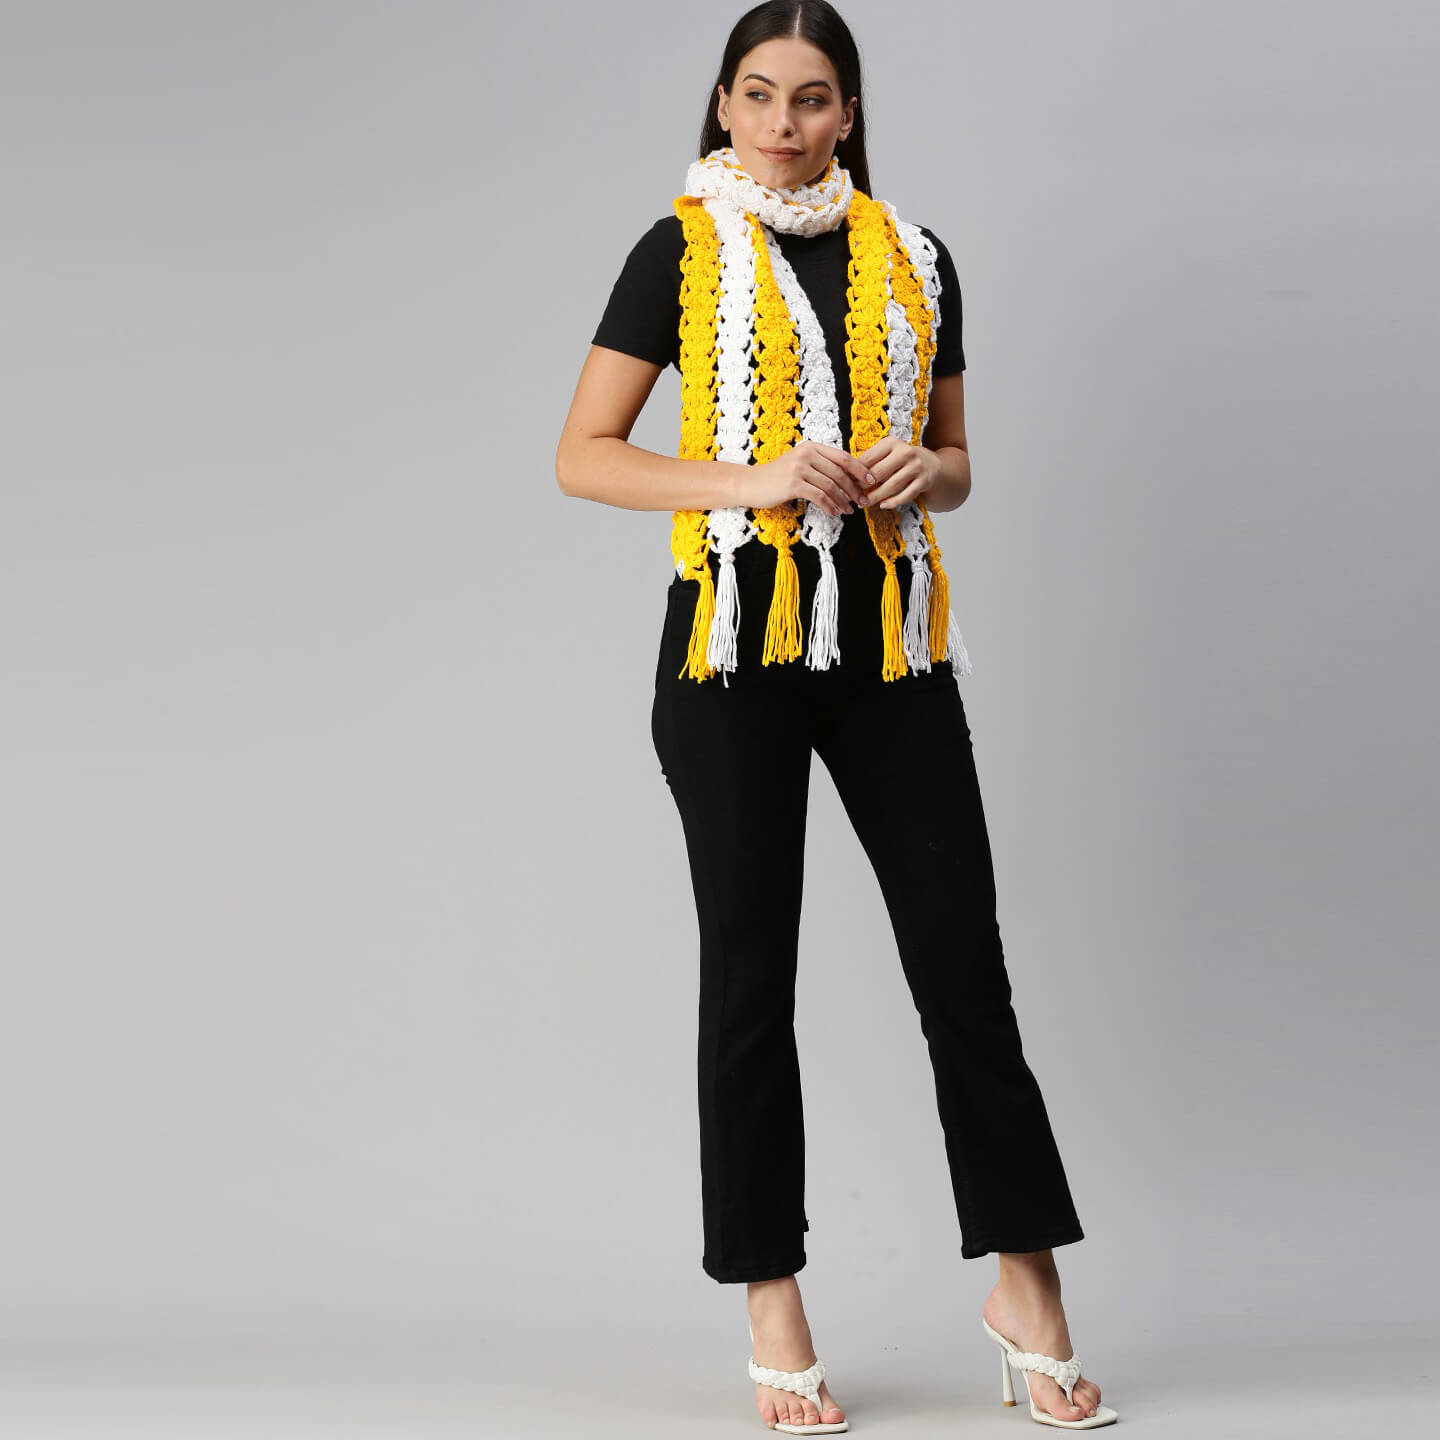 Flower Striped Crochet Scarf - Yellow, White 2845